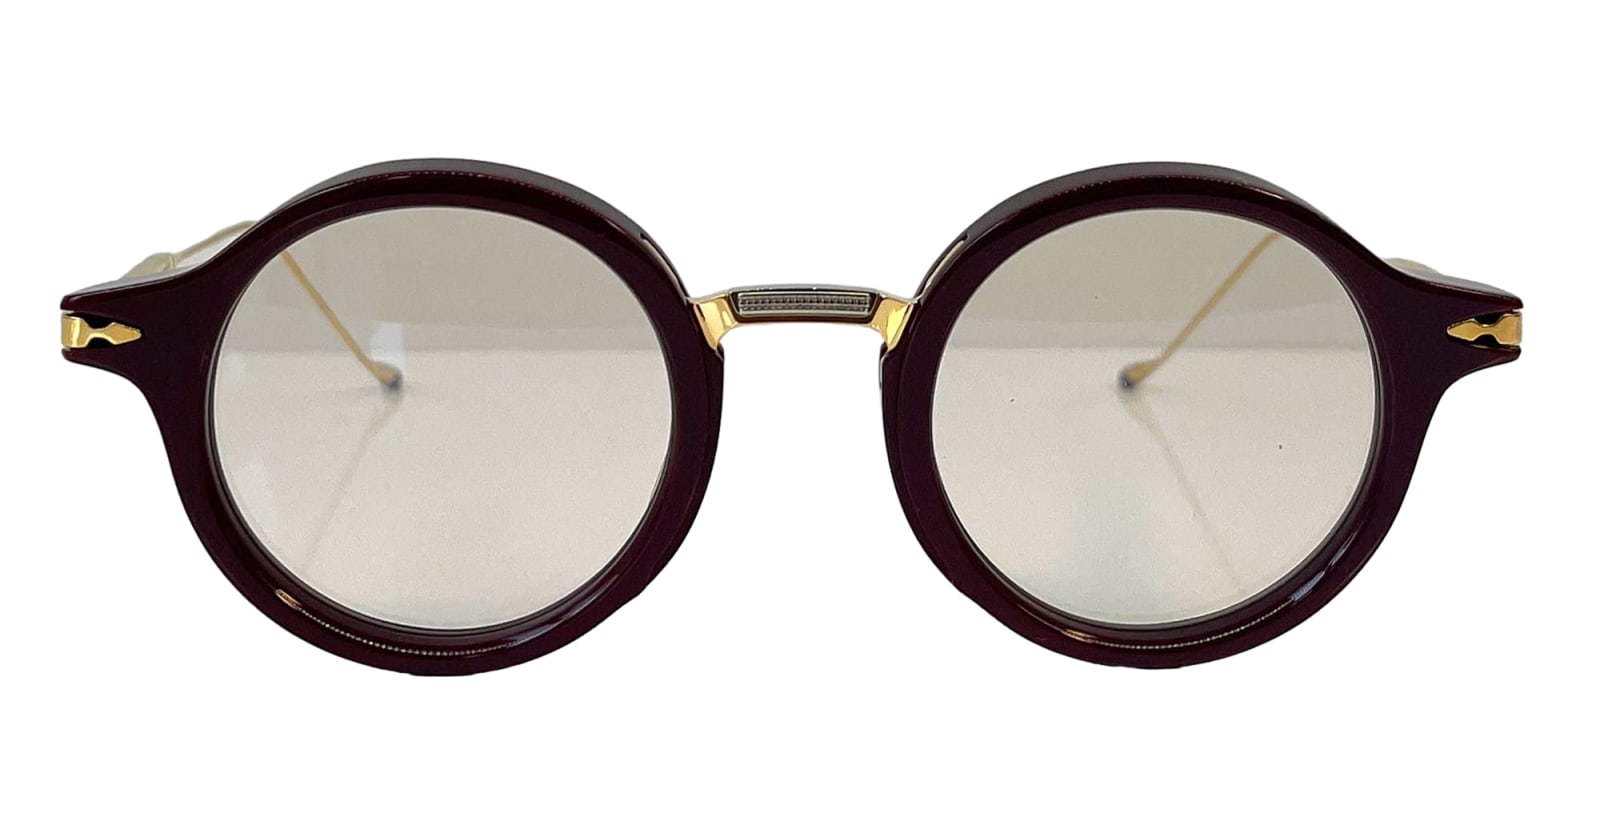 Norman - Reserve Rx Glasses